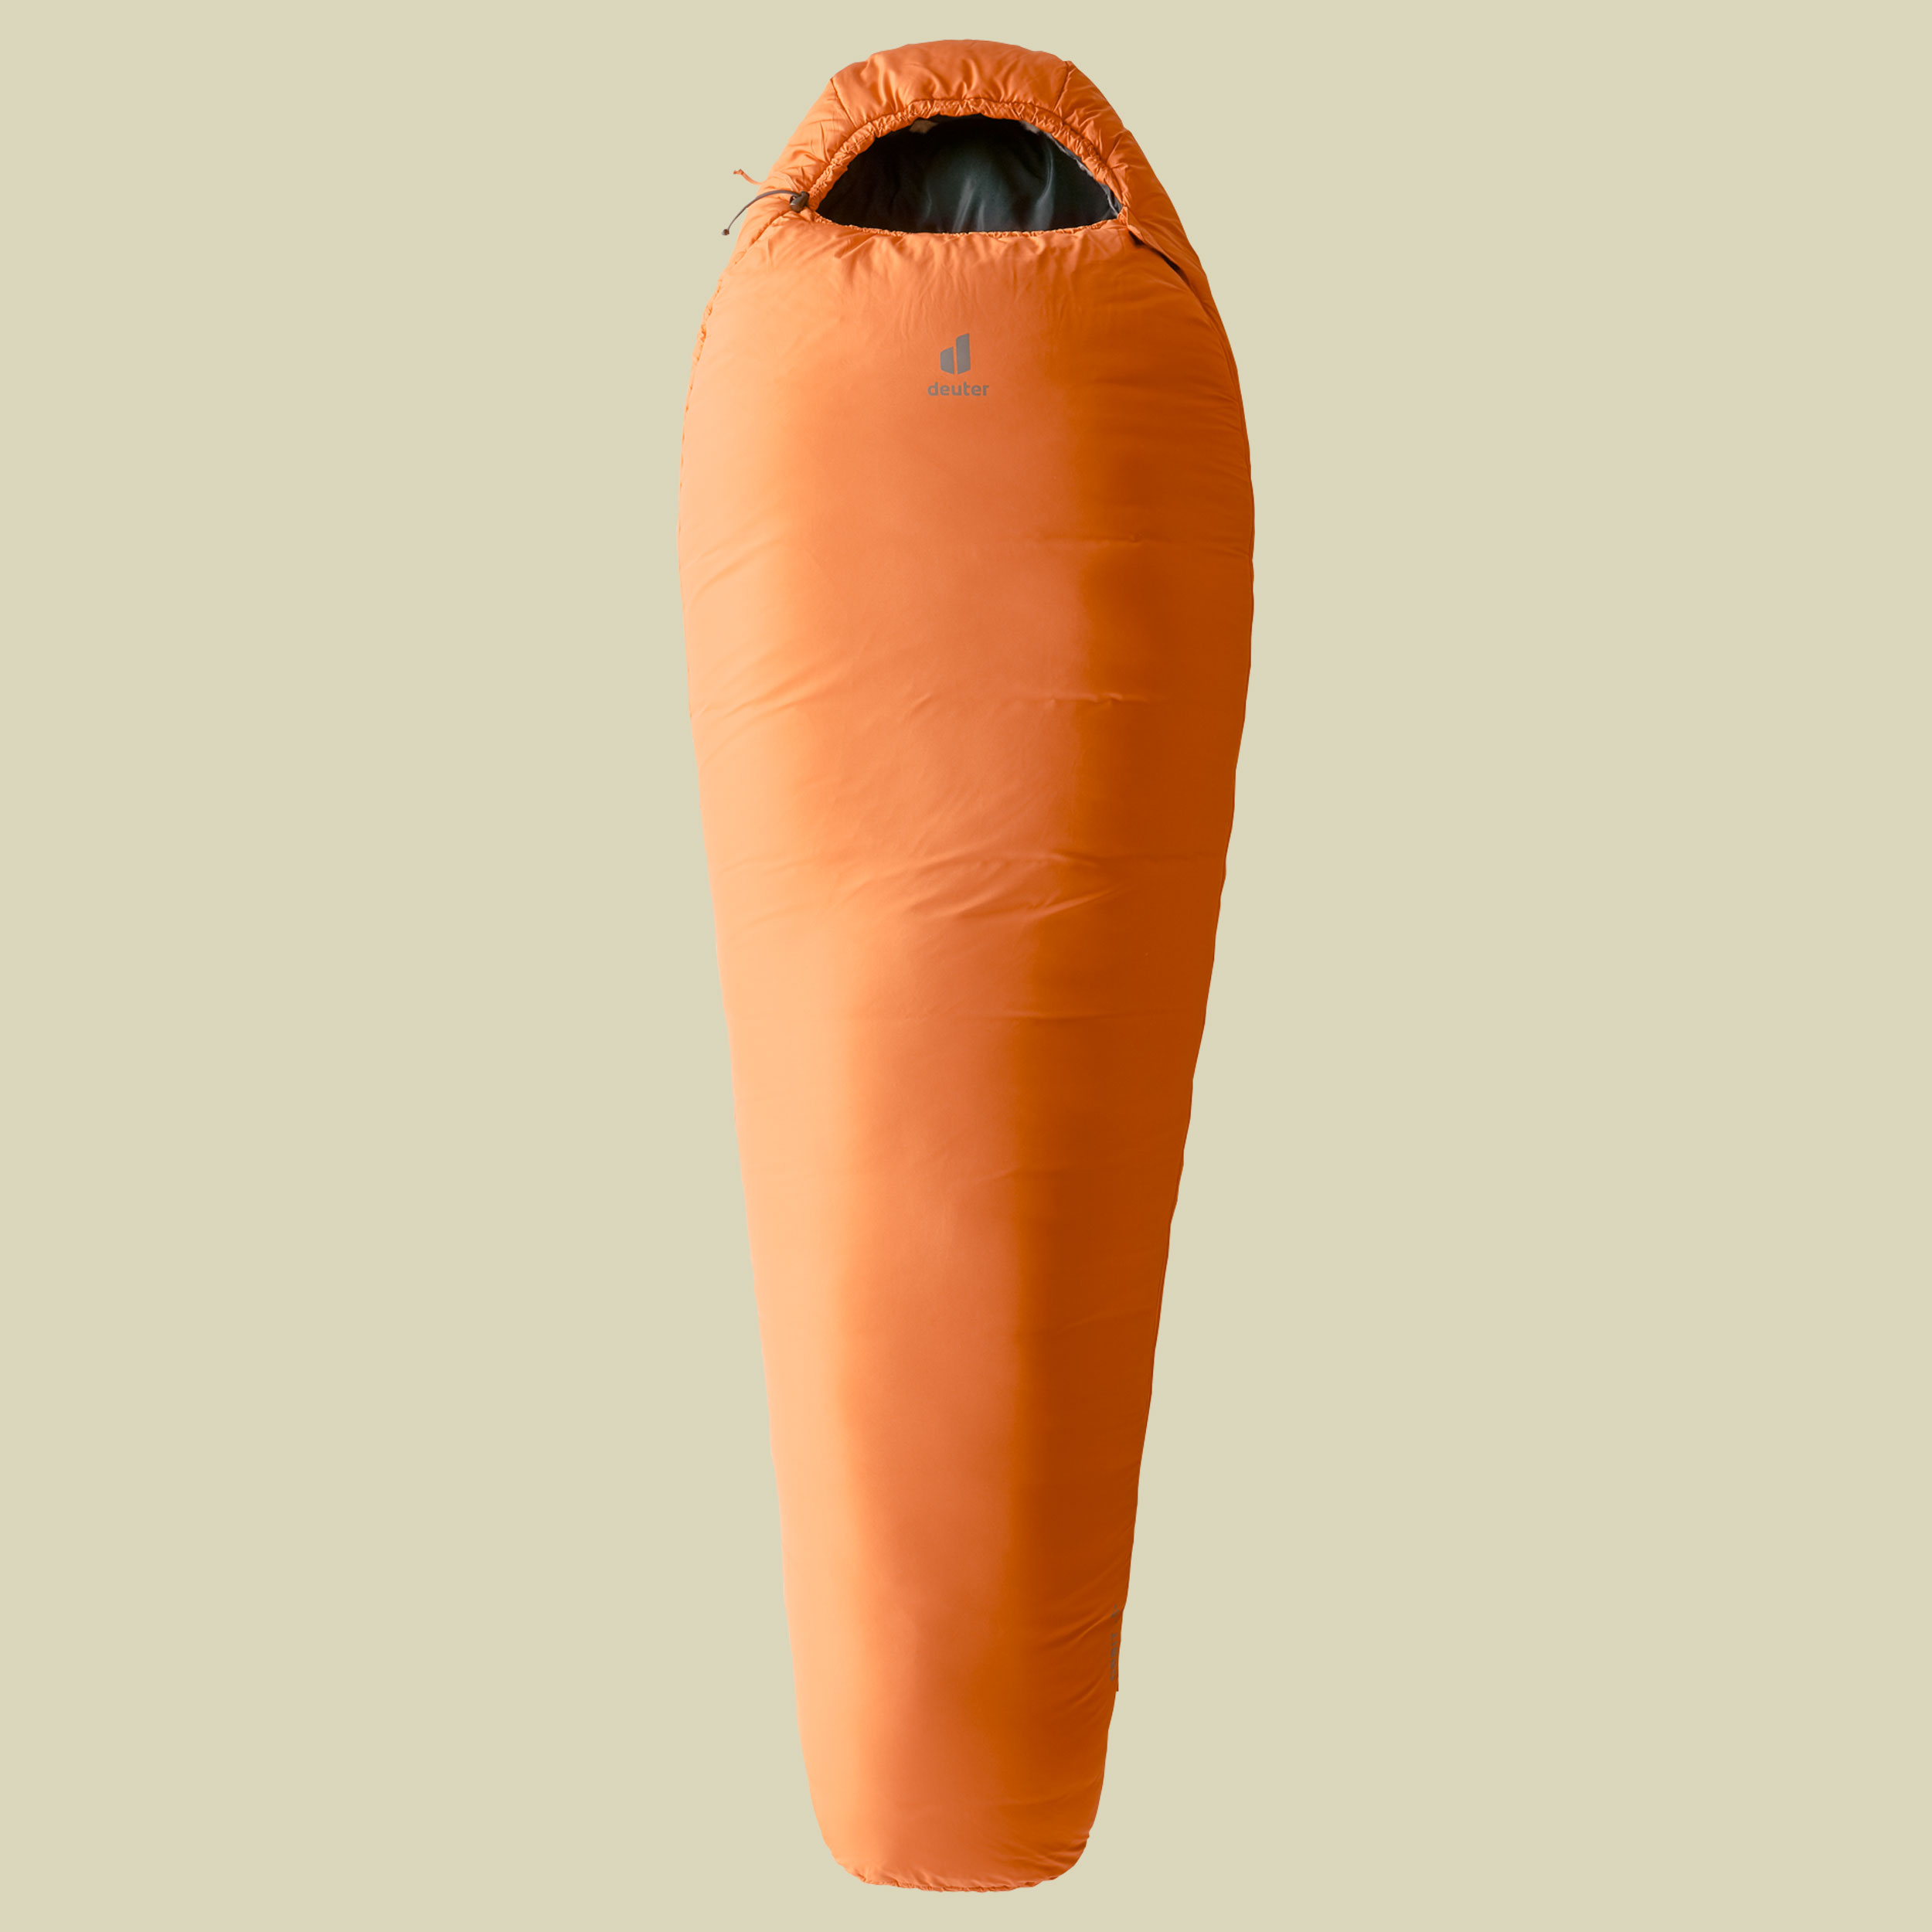 Orbit -5 Grad REG bis Körpergröße 185 cm Farbe mandarine-ink, Reißverschluss links